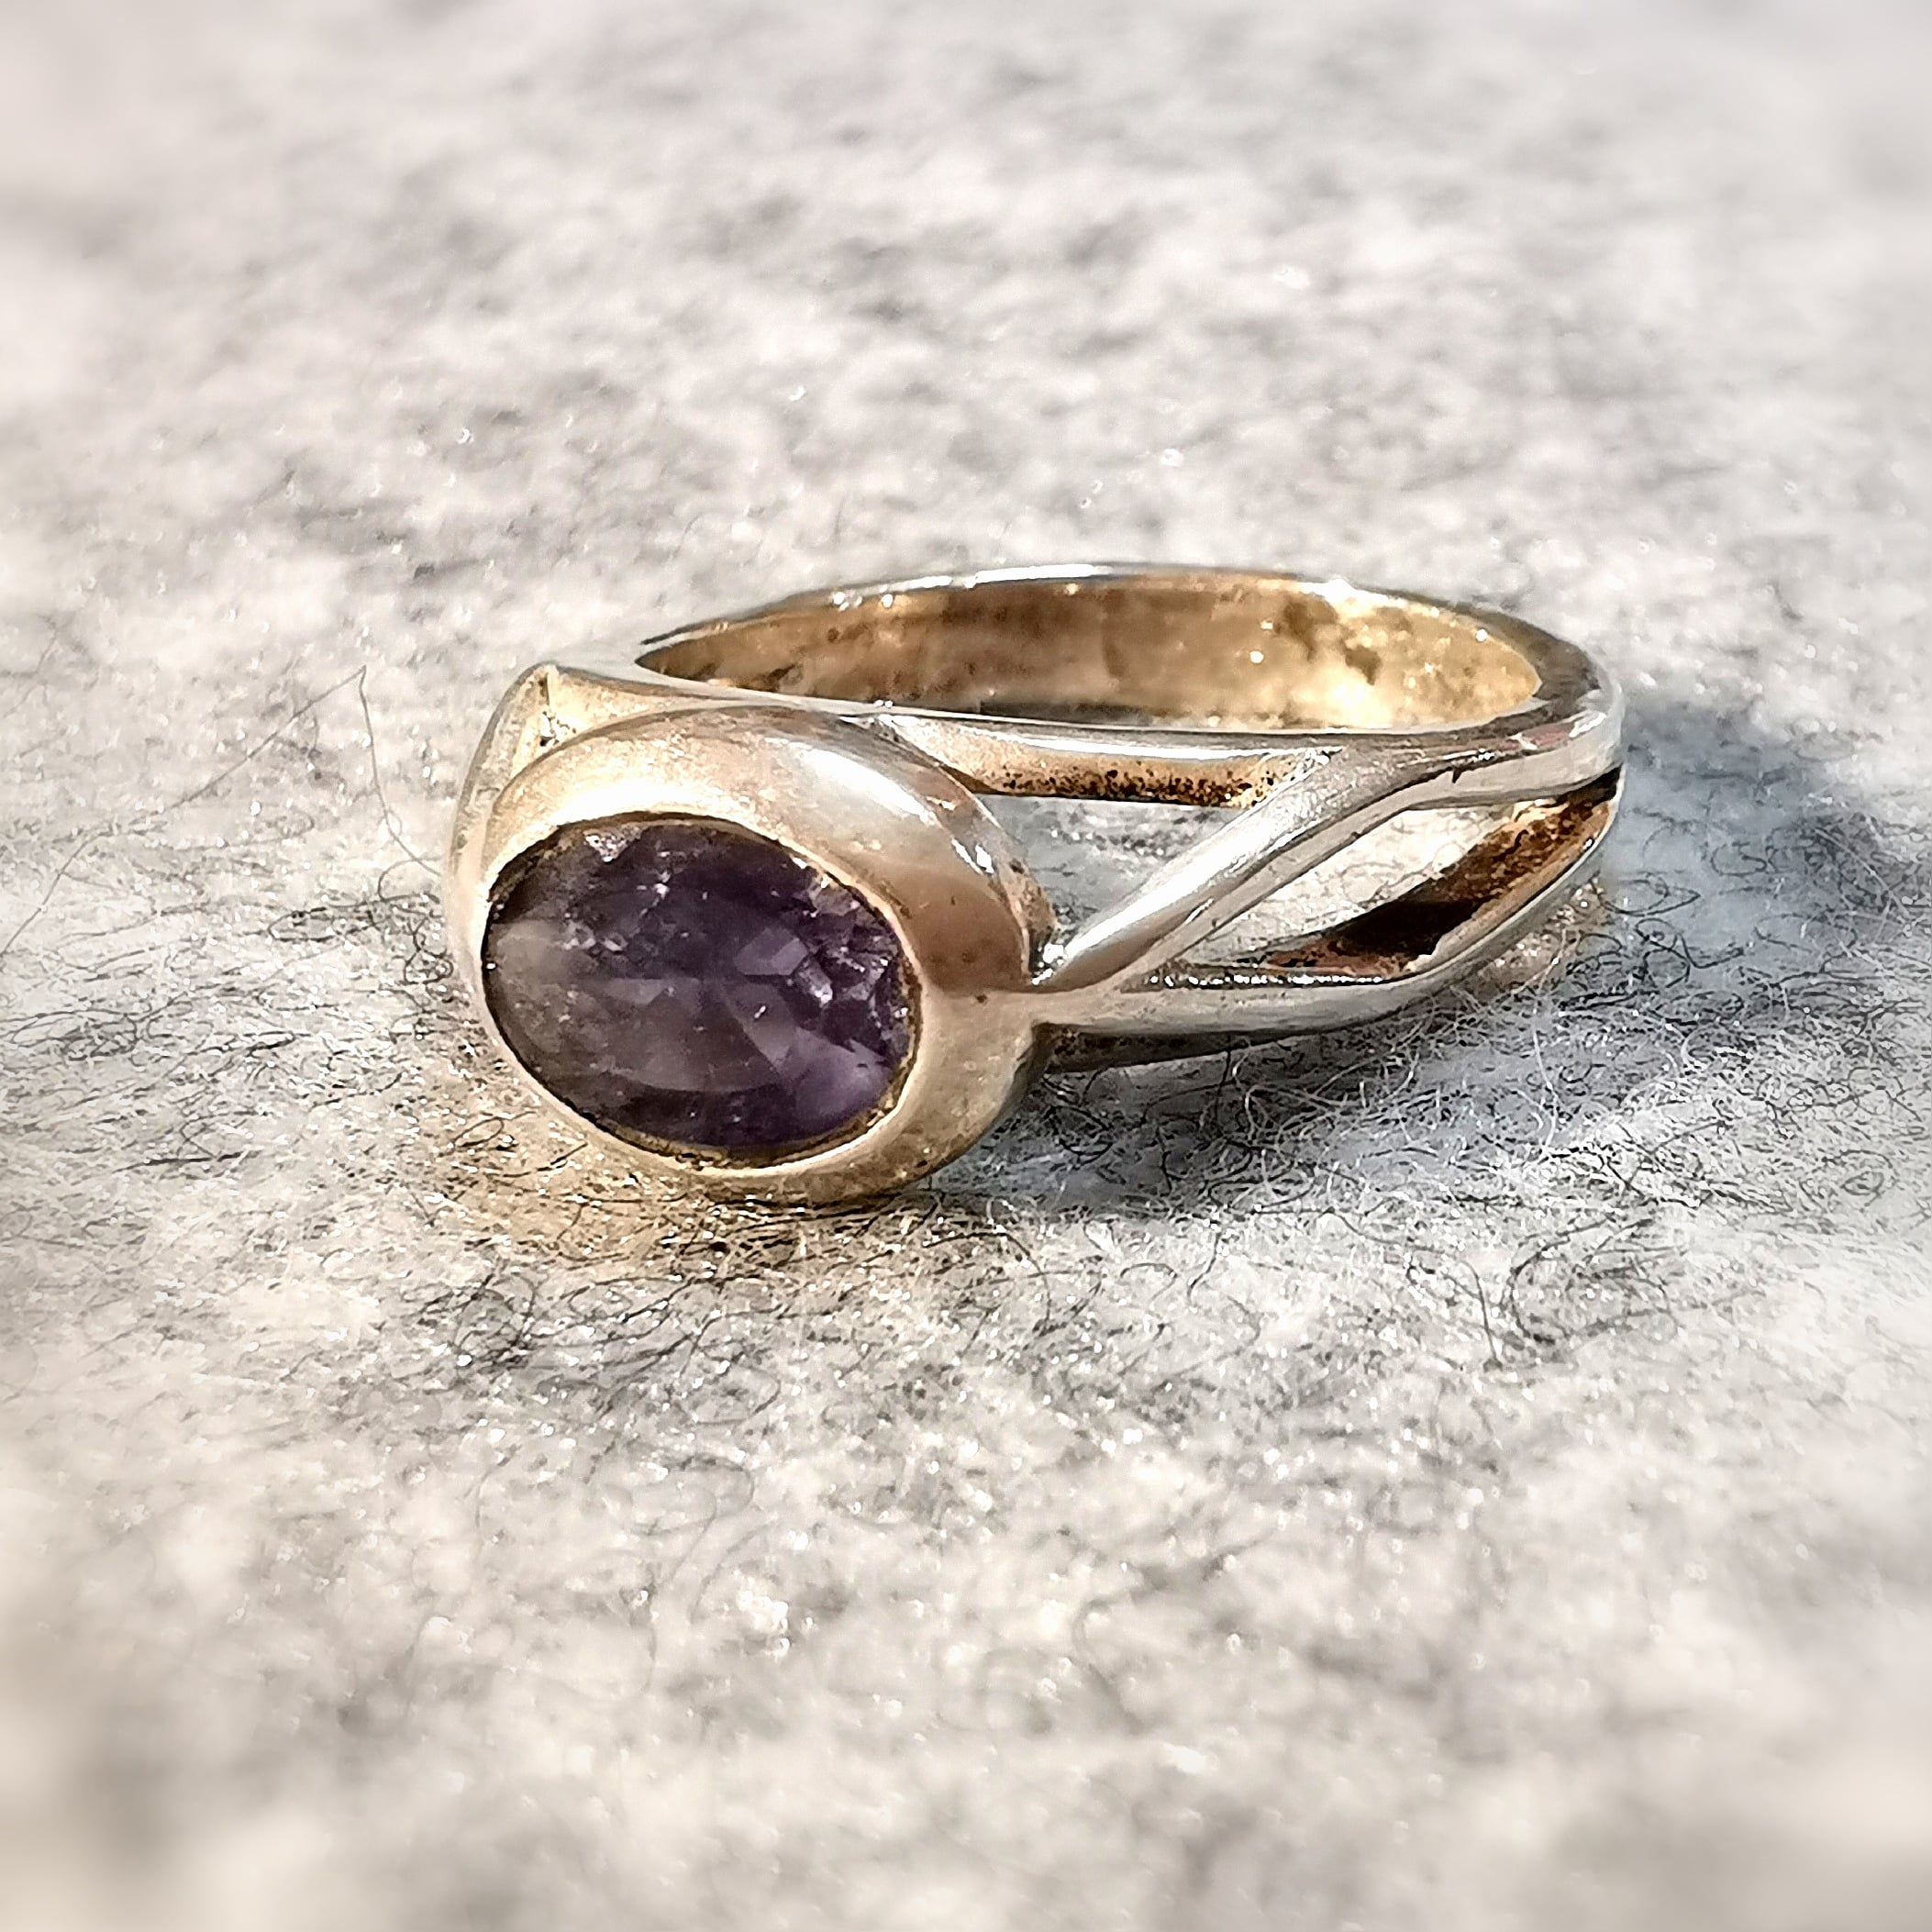 Amethyst Sterlingsilber Vintage Design Ring, kleine Grösse 49, Kronenchakra Edelstein Fingerring, zur Ruhe kommen